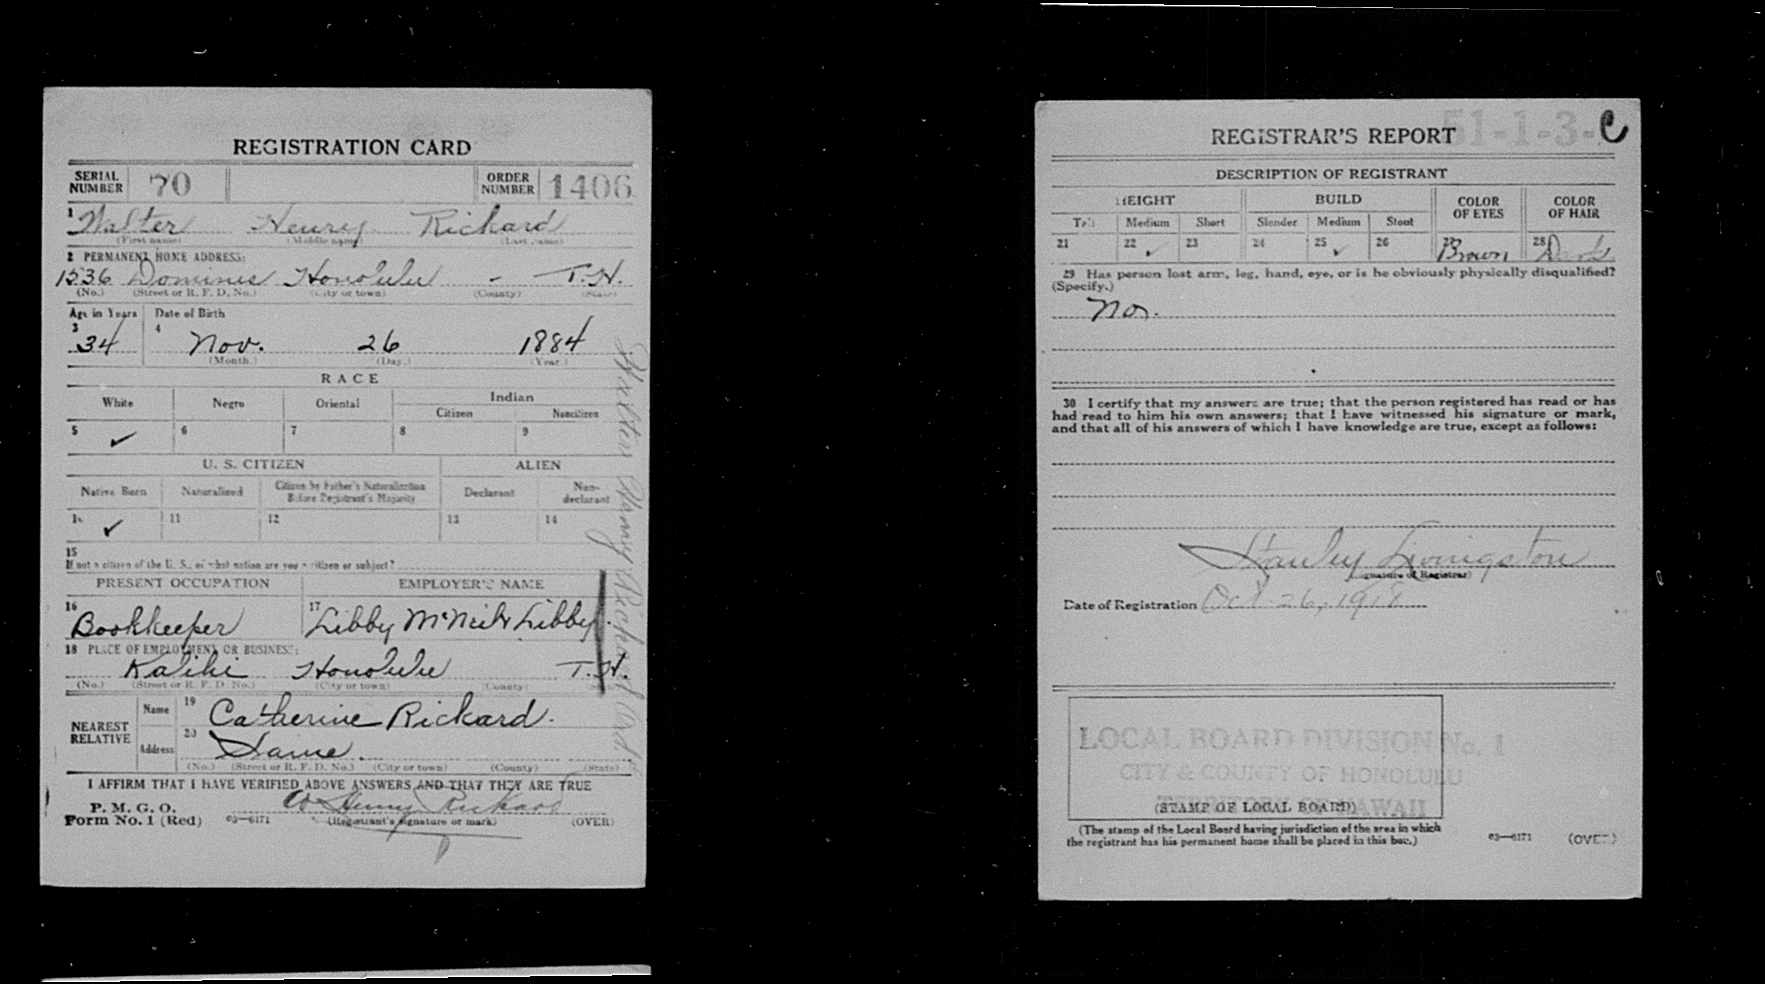  Walter Henry Rickard's military registration card's